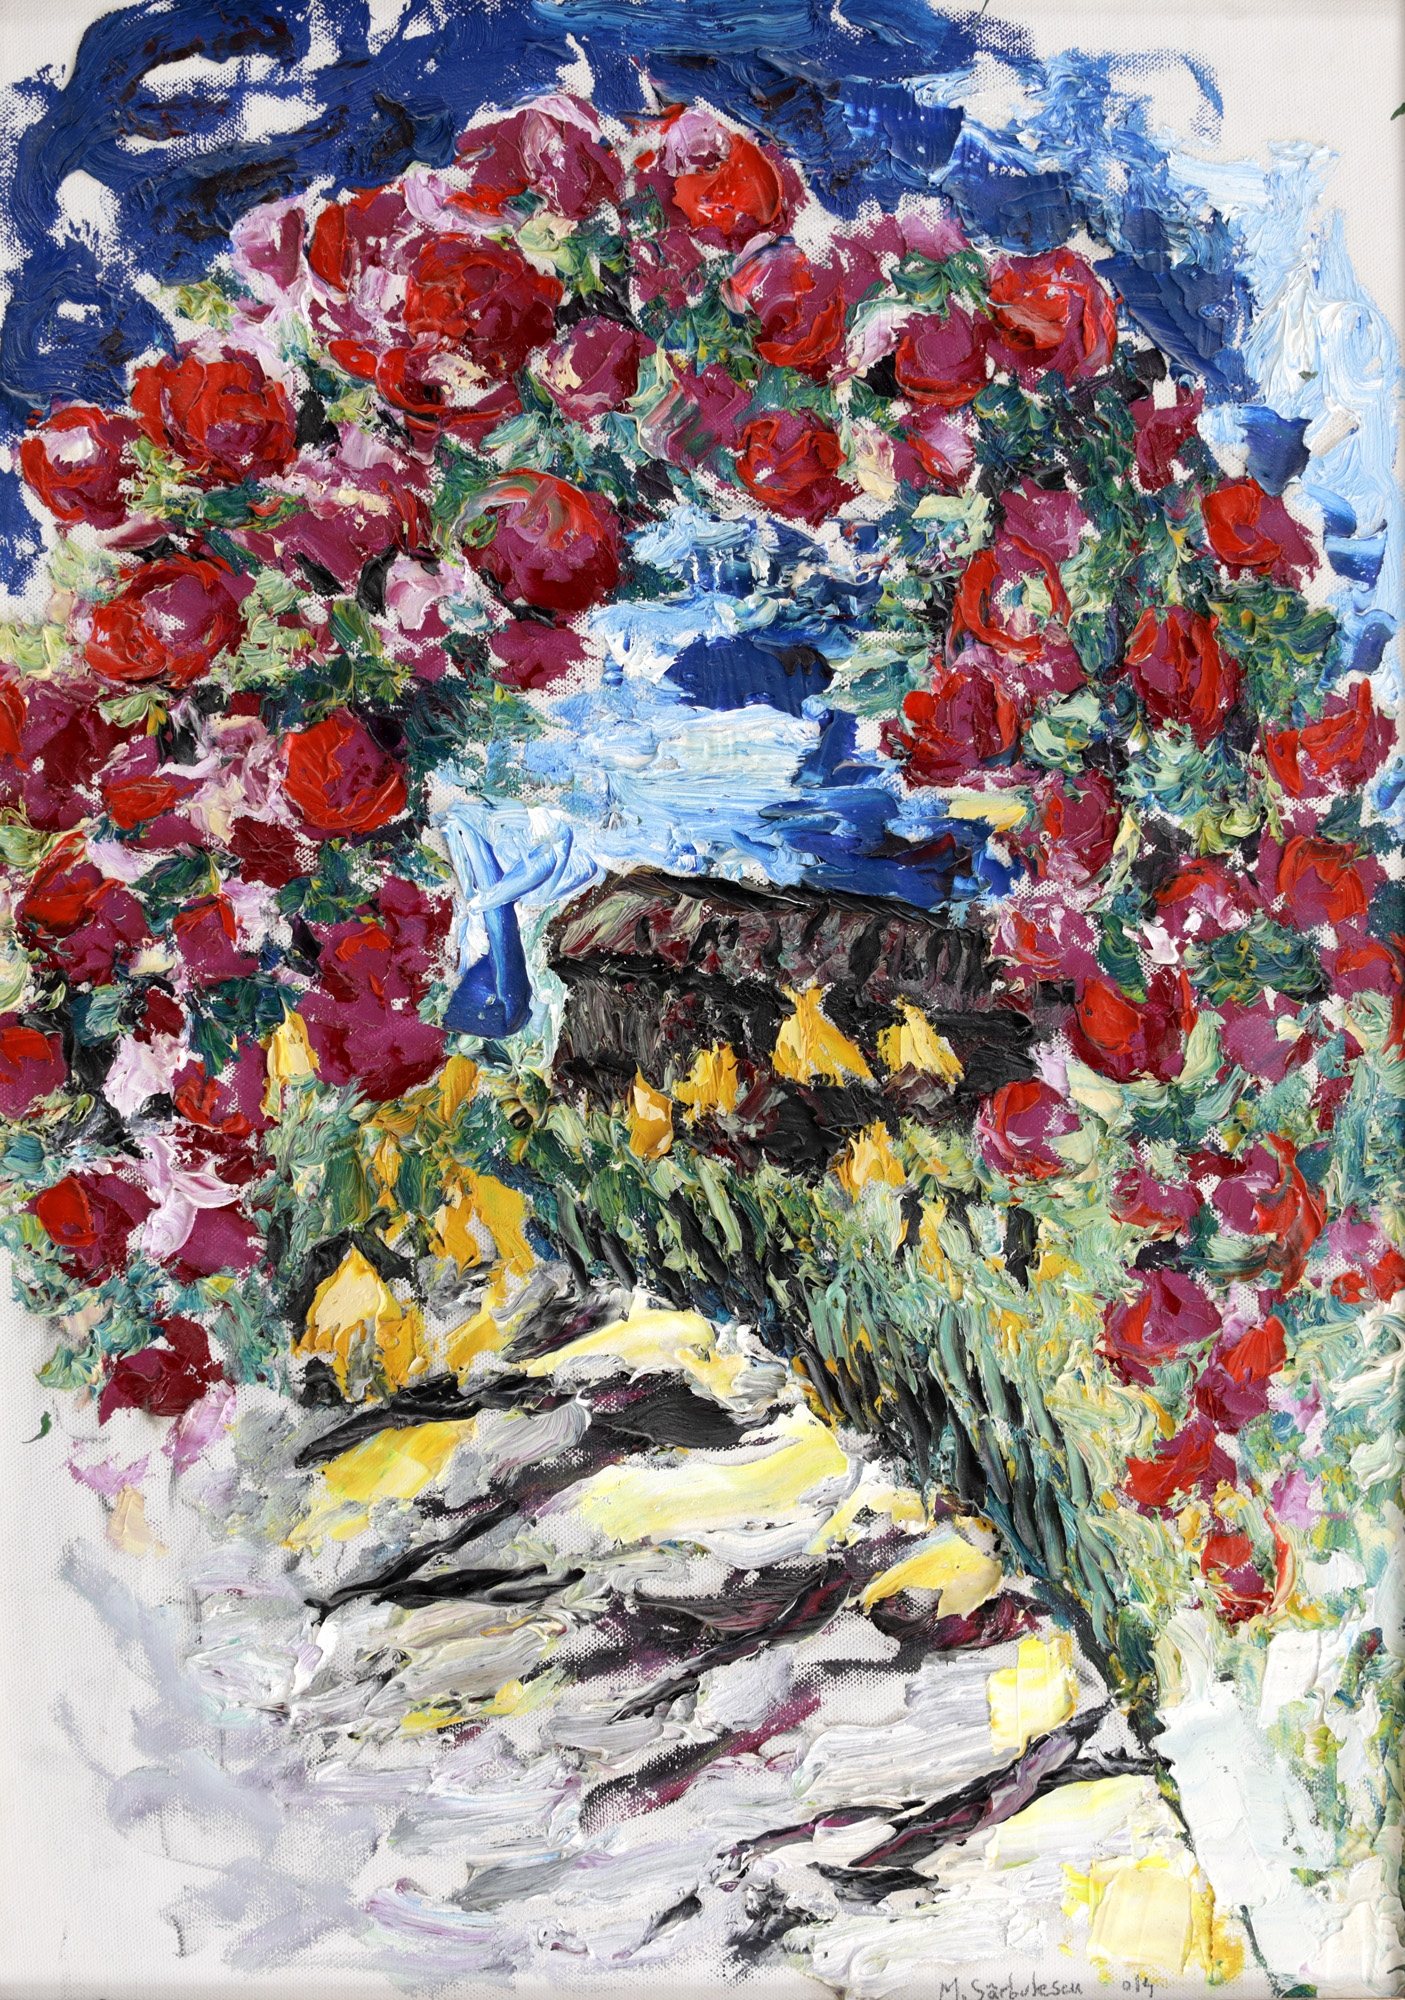 Flowers at Agapia [2014] by Mihai Sarbulescu, 2014